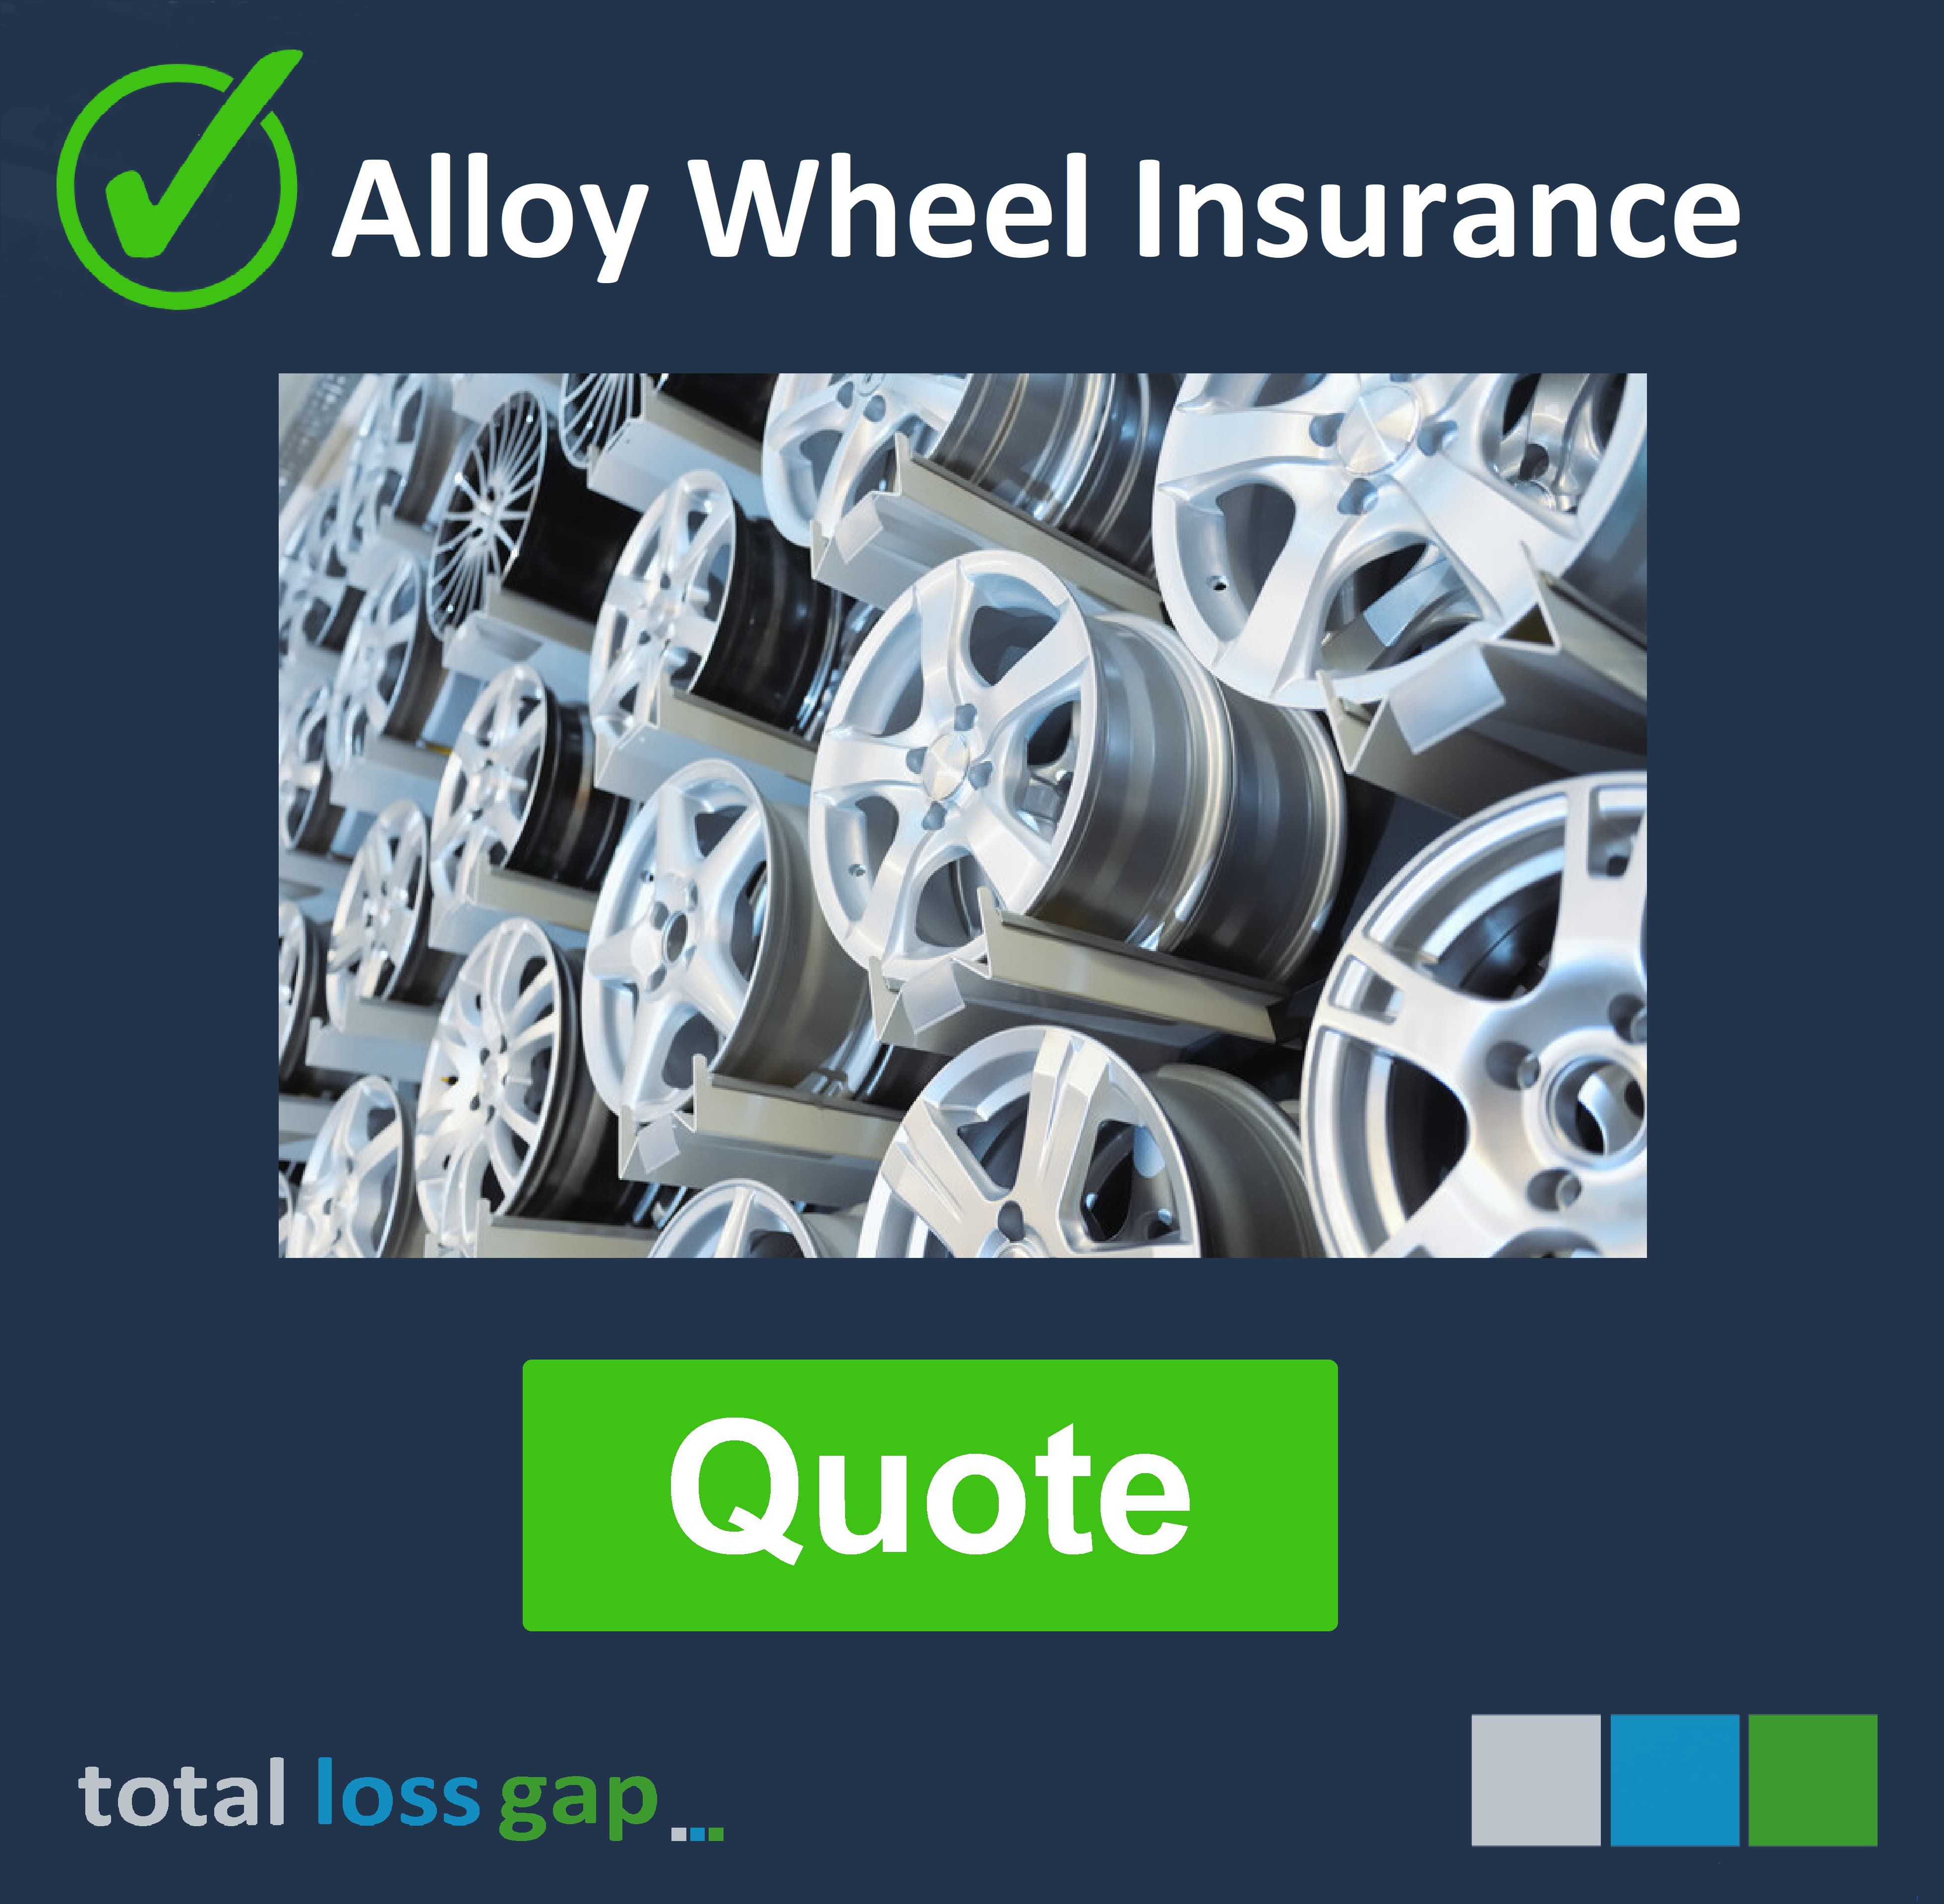 Alloy Wheel Insurance for your EV